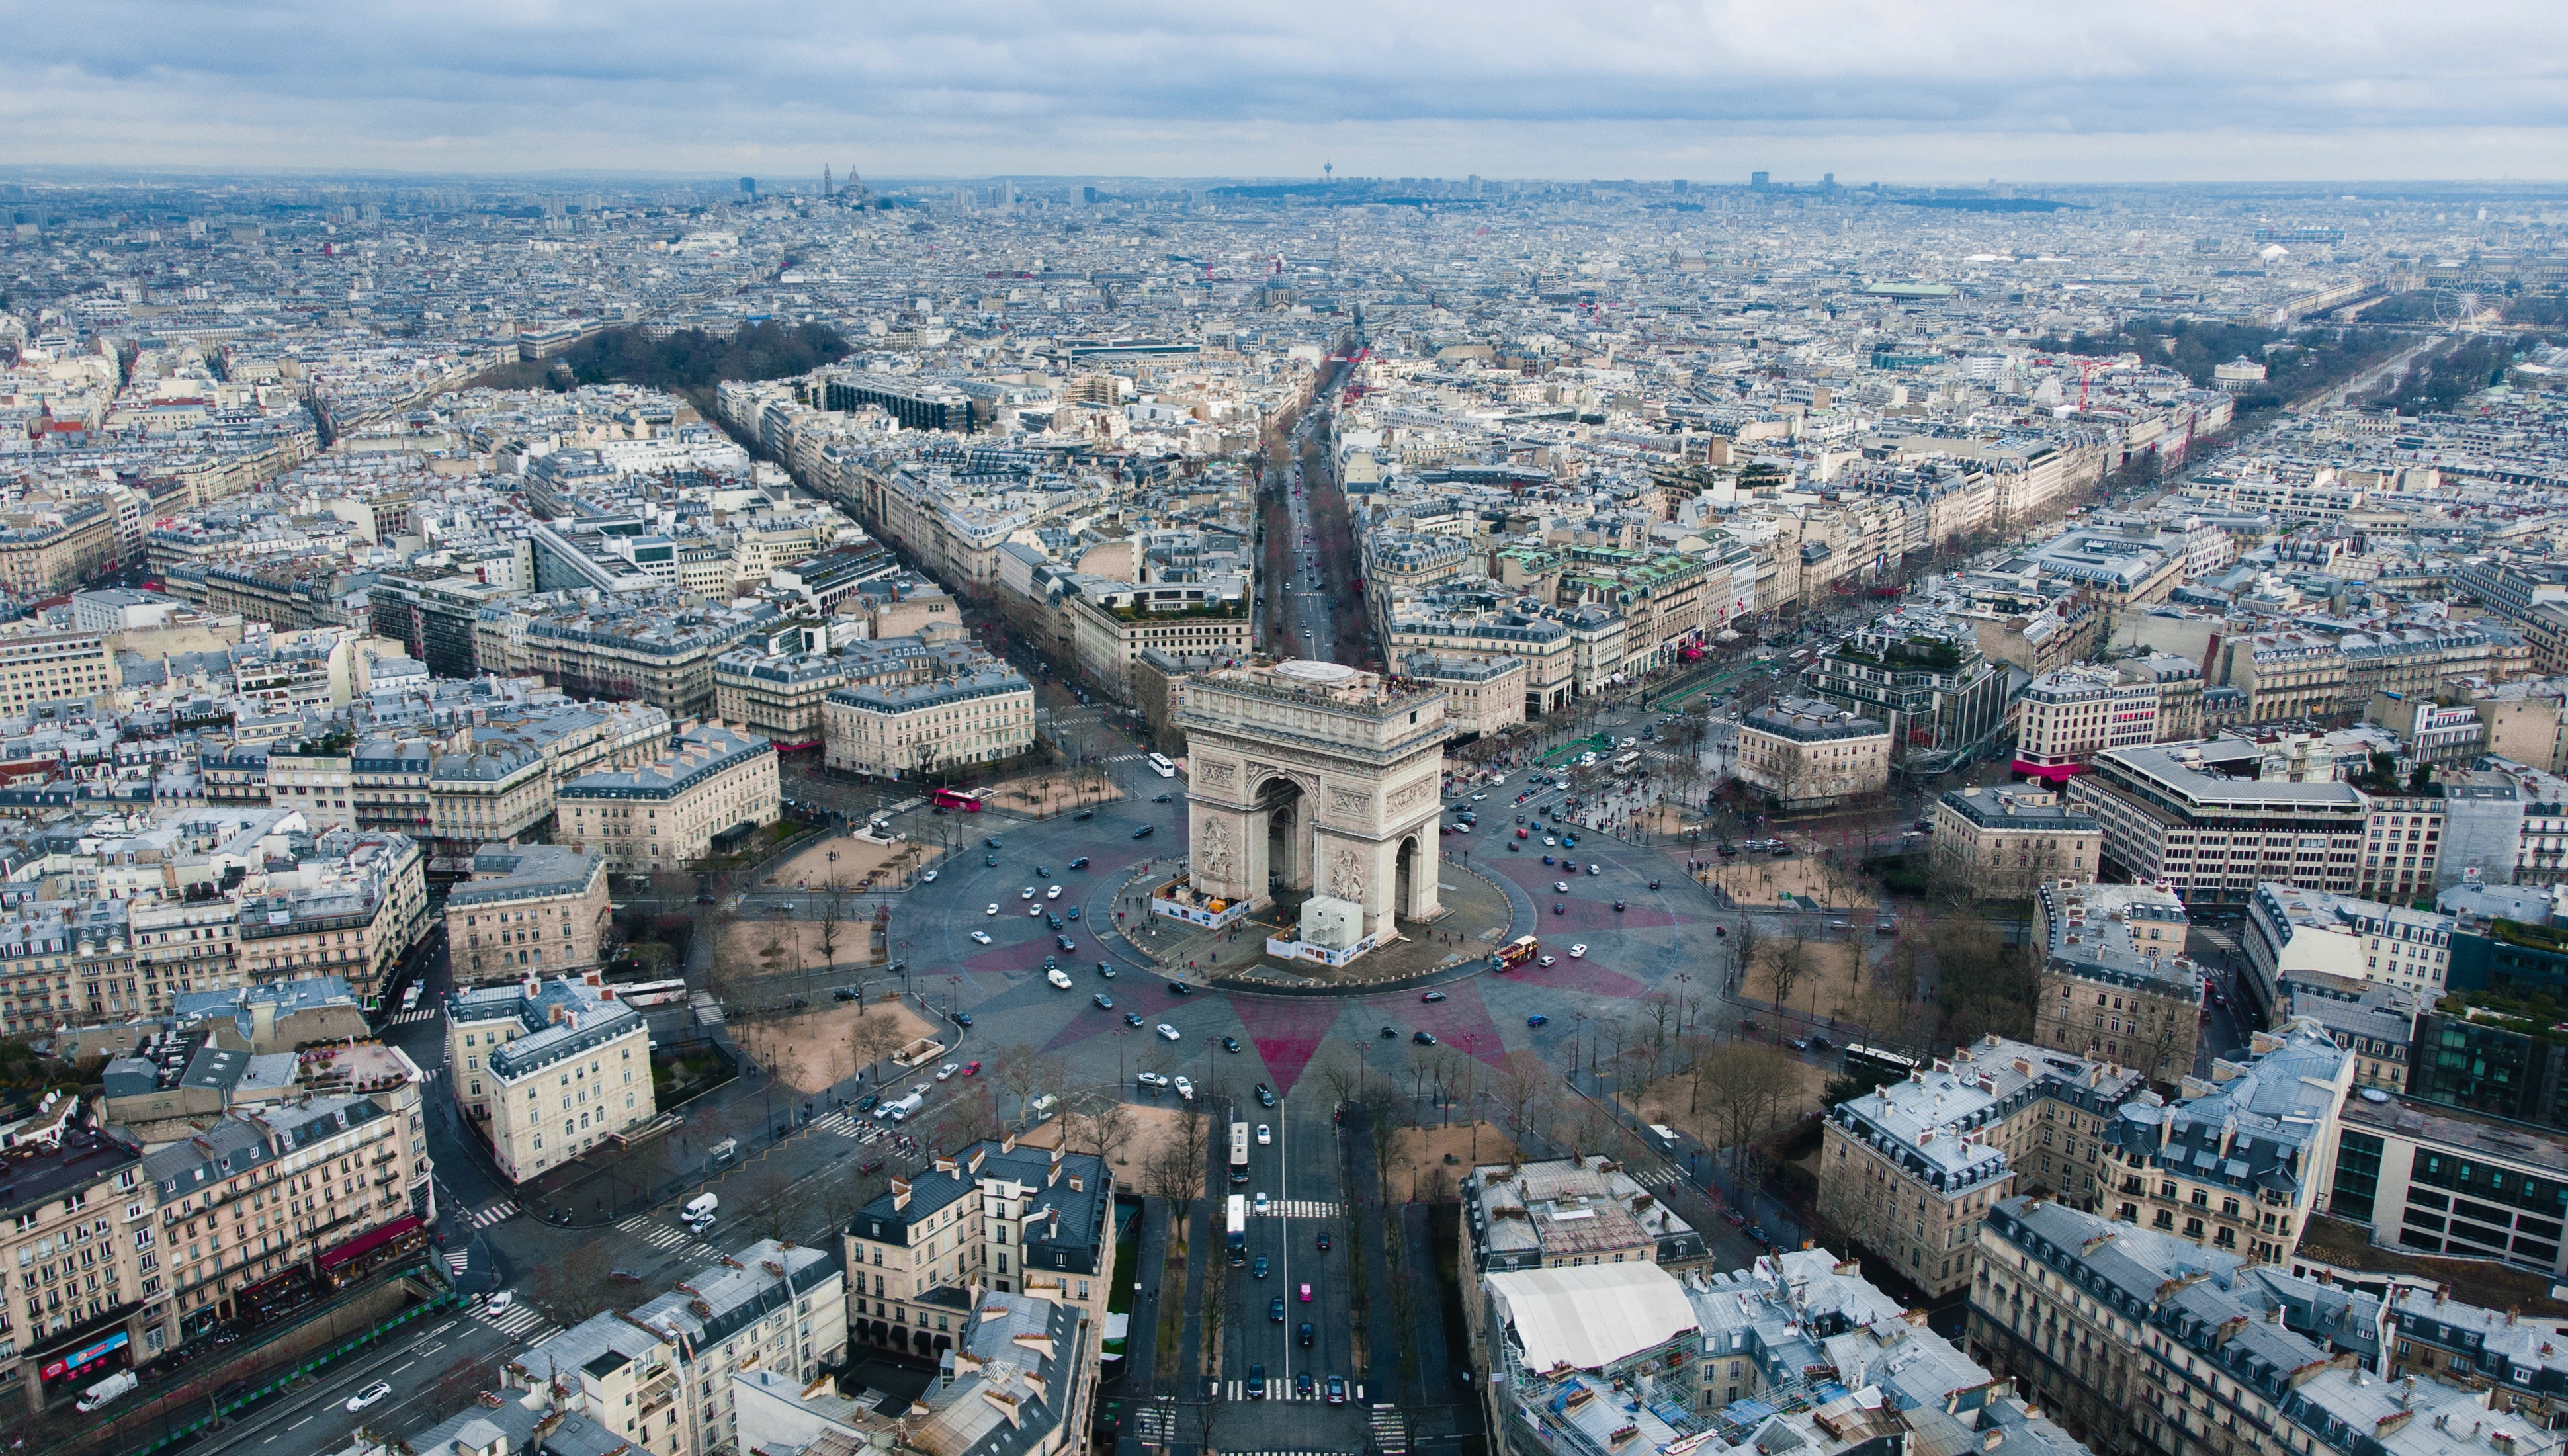 Champs-Elysees.jpg